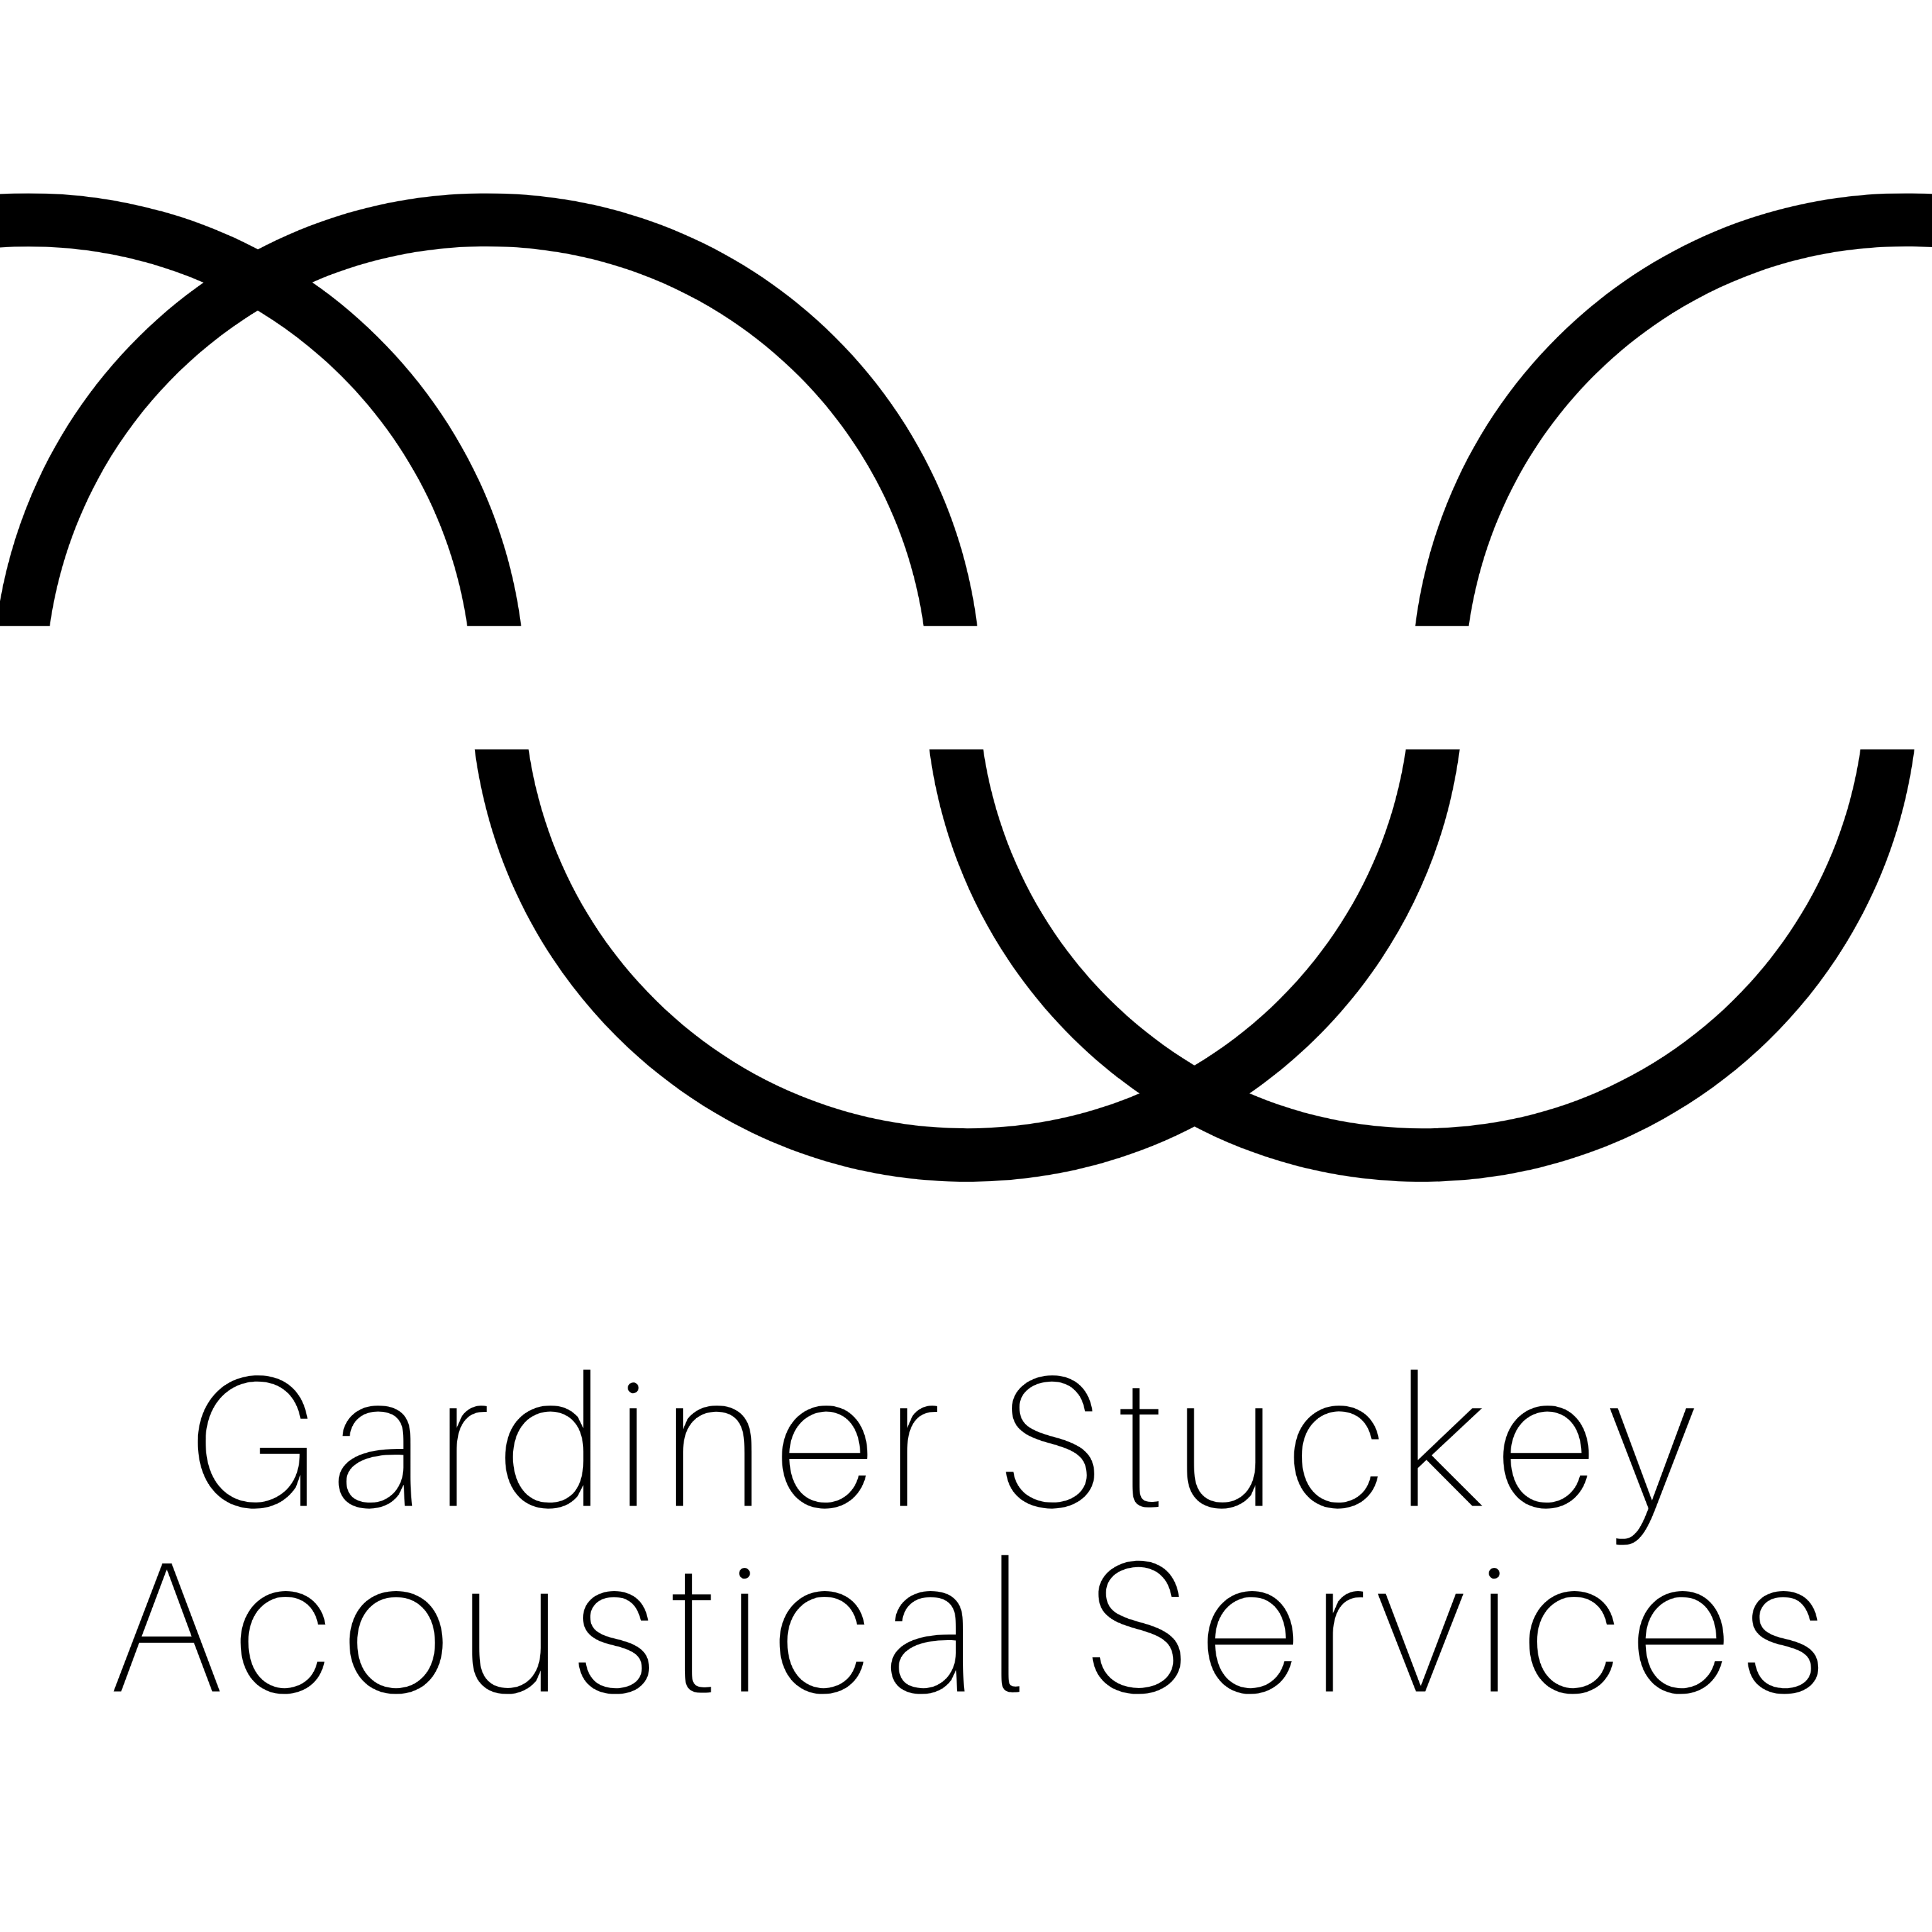 Gardiner Stuckey Acoustical Services